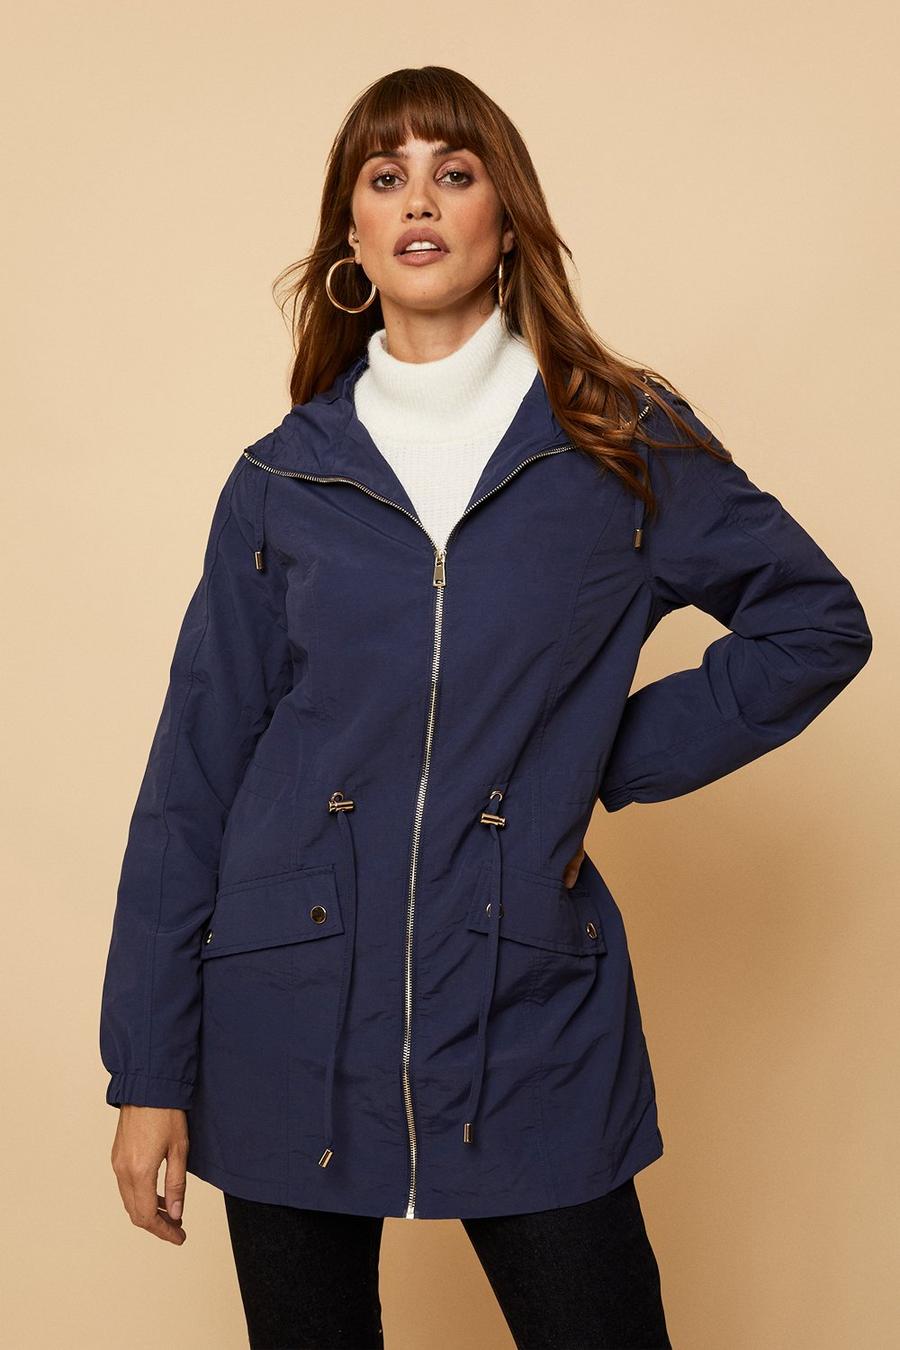 Wallis Coat Sizes 8-14Red Stud Pocket Waterfall Style£69 RRPBNWT Jacket 